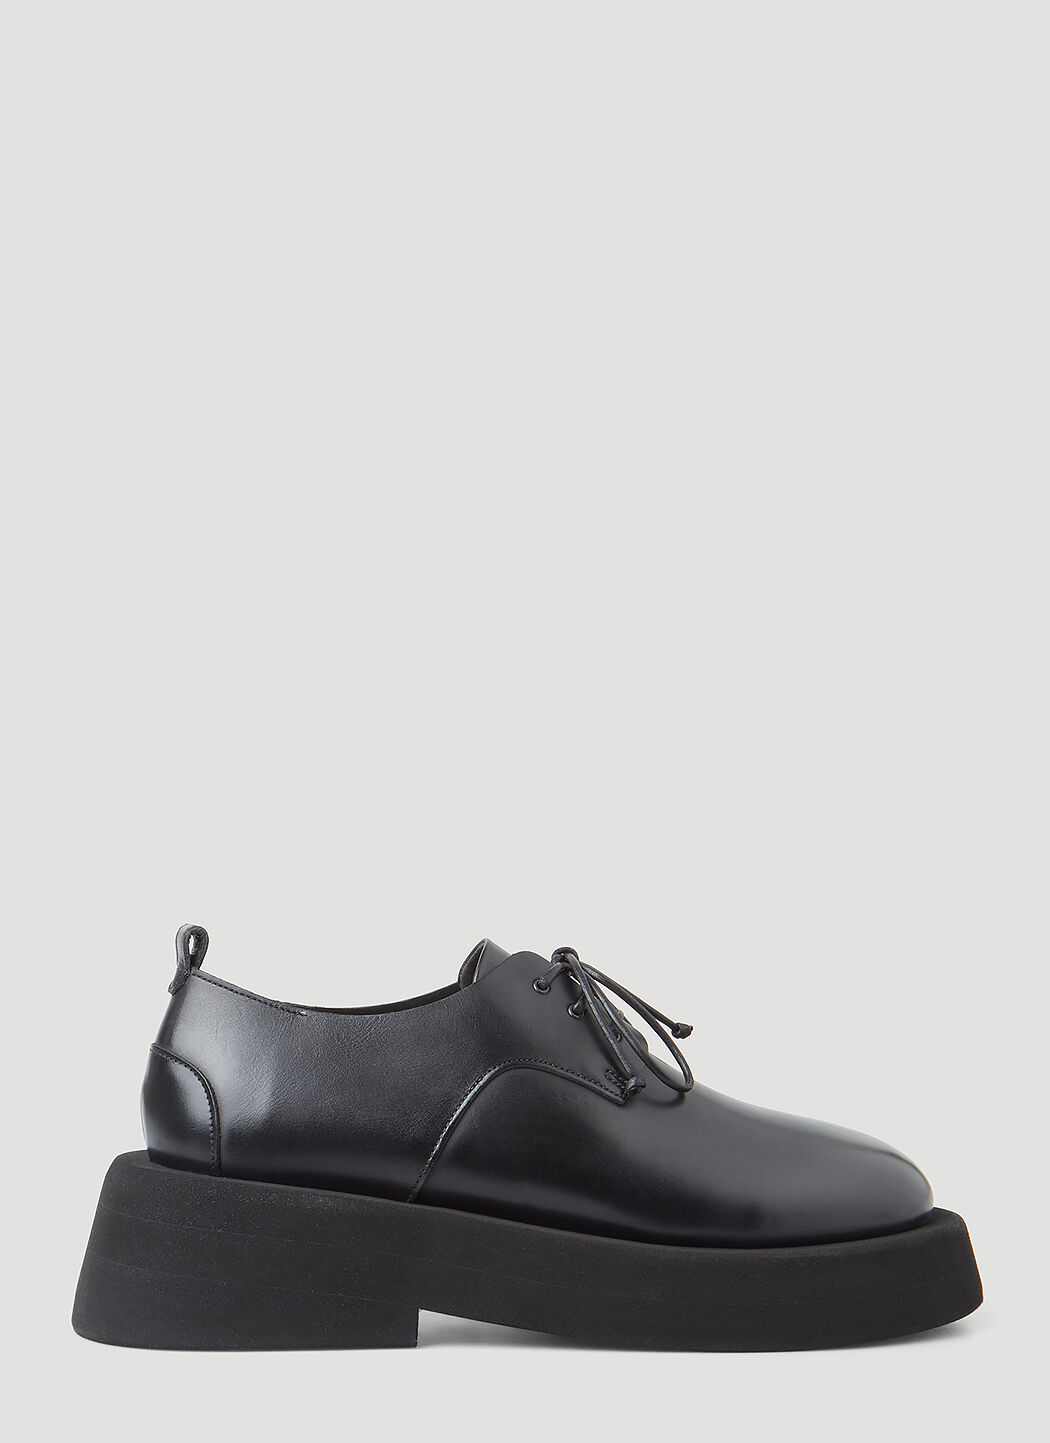 Vivienne Westwood Gommellone Derby Shoes Black vvw0255059